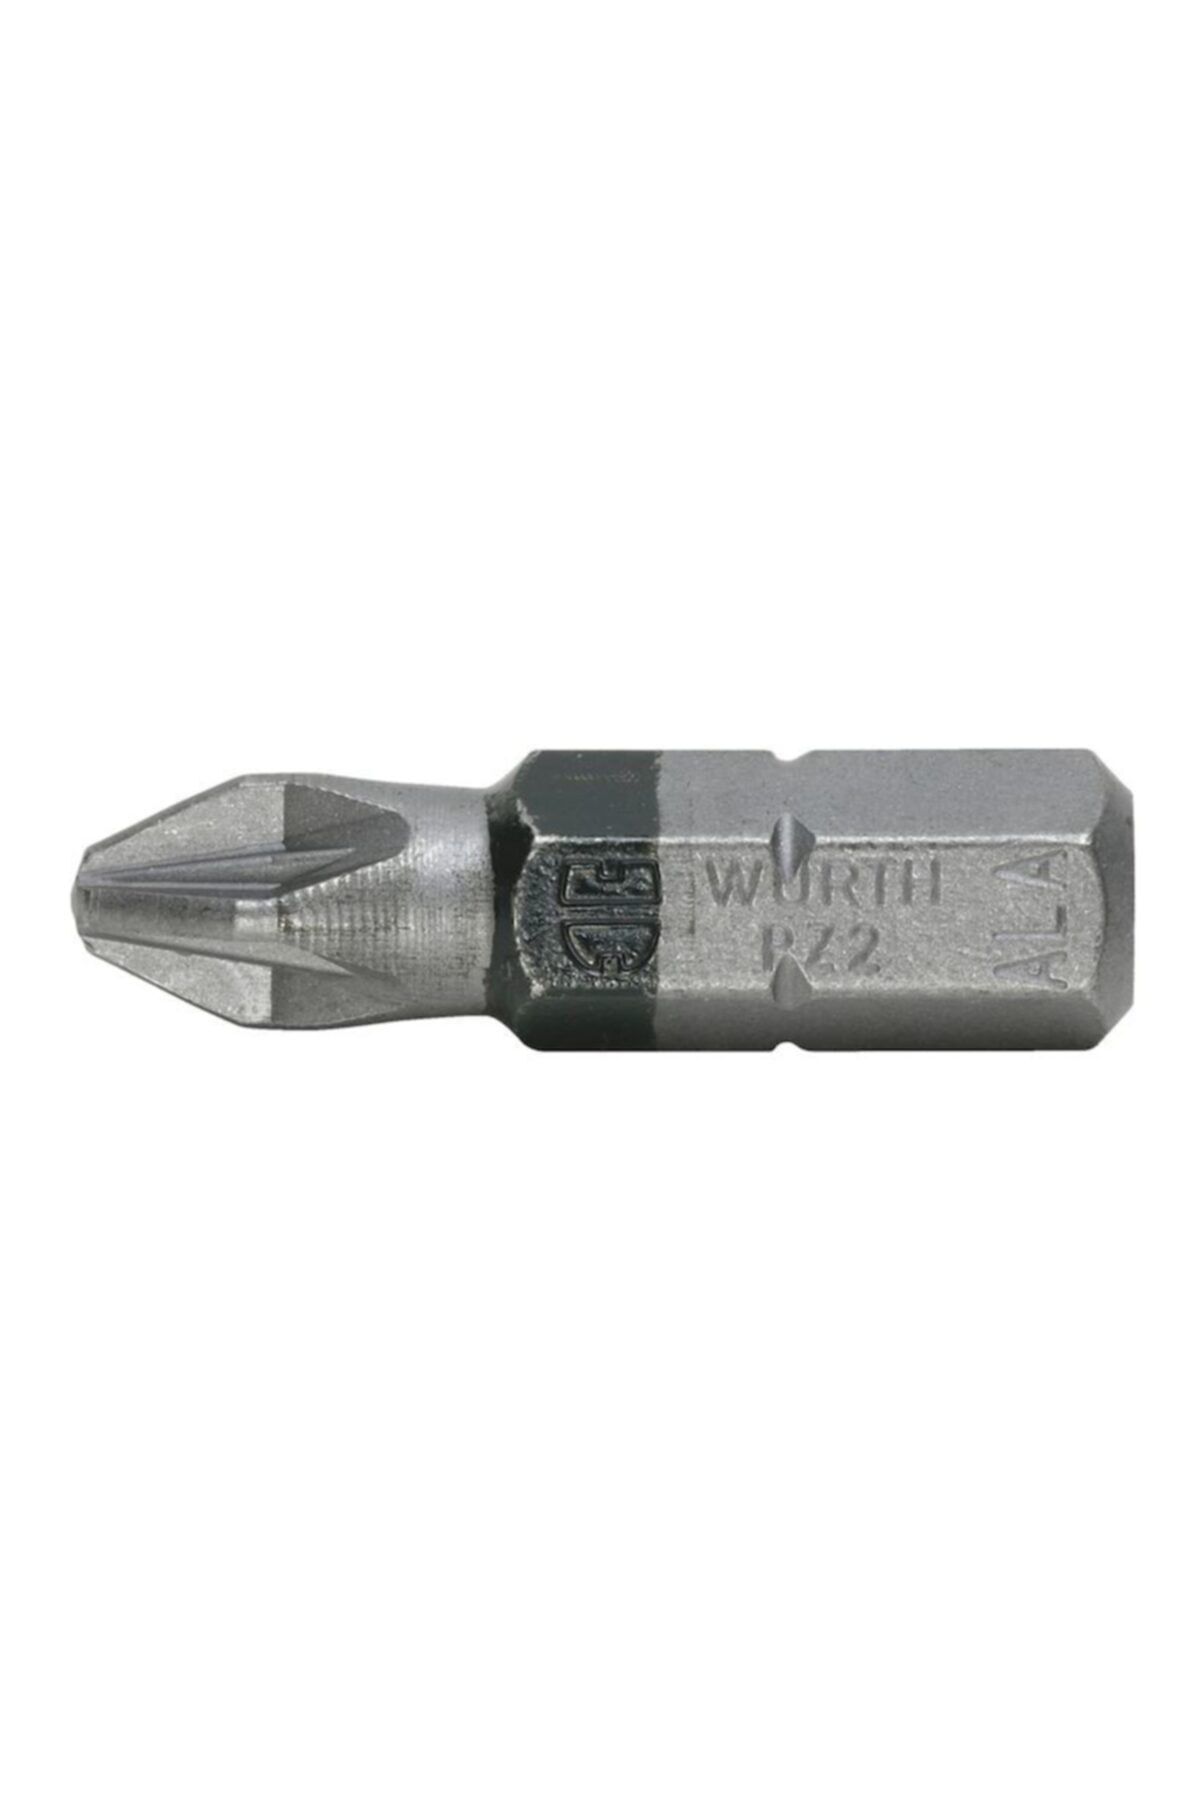 Würth Bits Uç-pz2-1/4ı-25mm 15 Adet